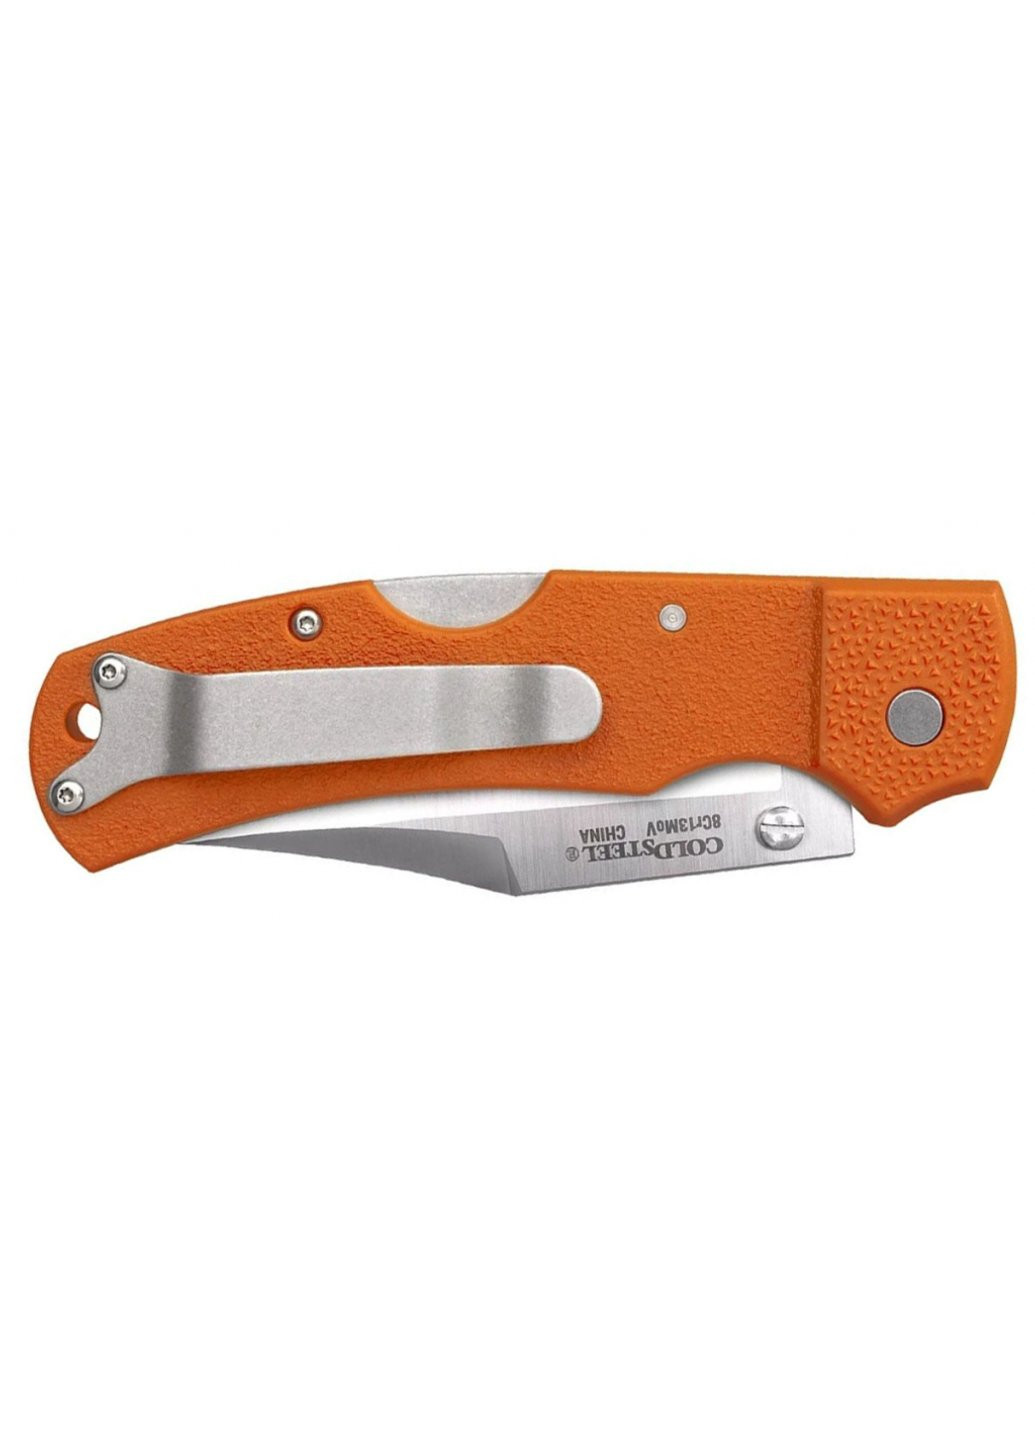 Нож Double Safe Hunter Orange (CS-23JB) Cold Steel (257224292)